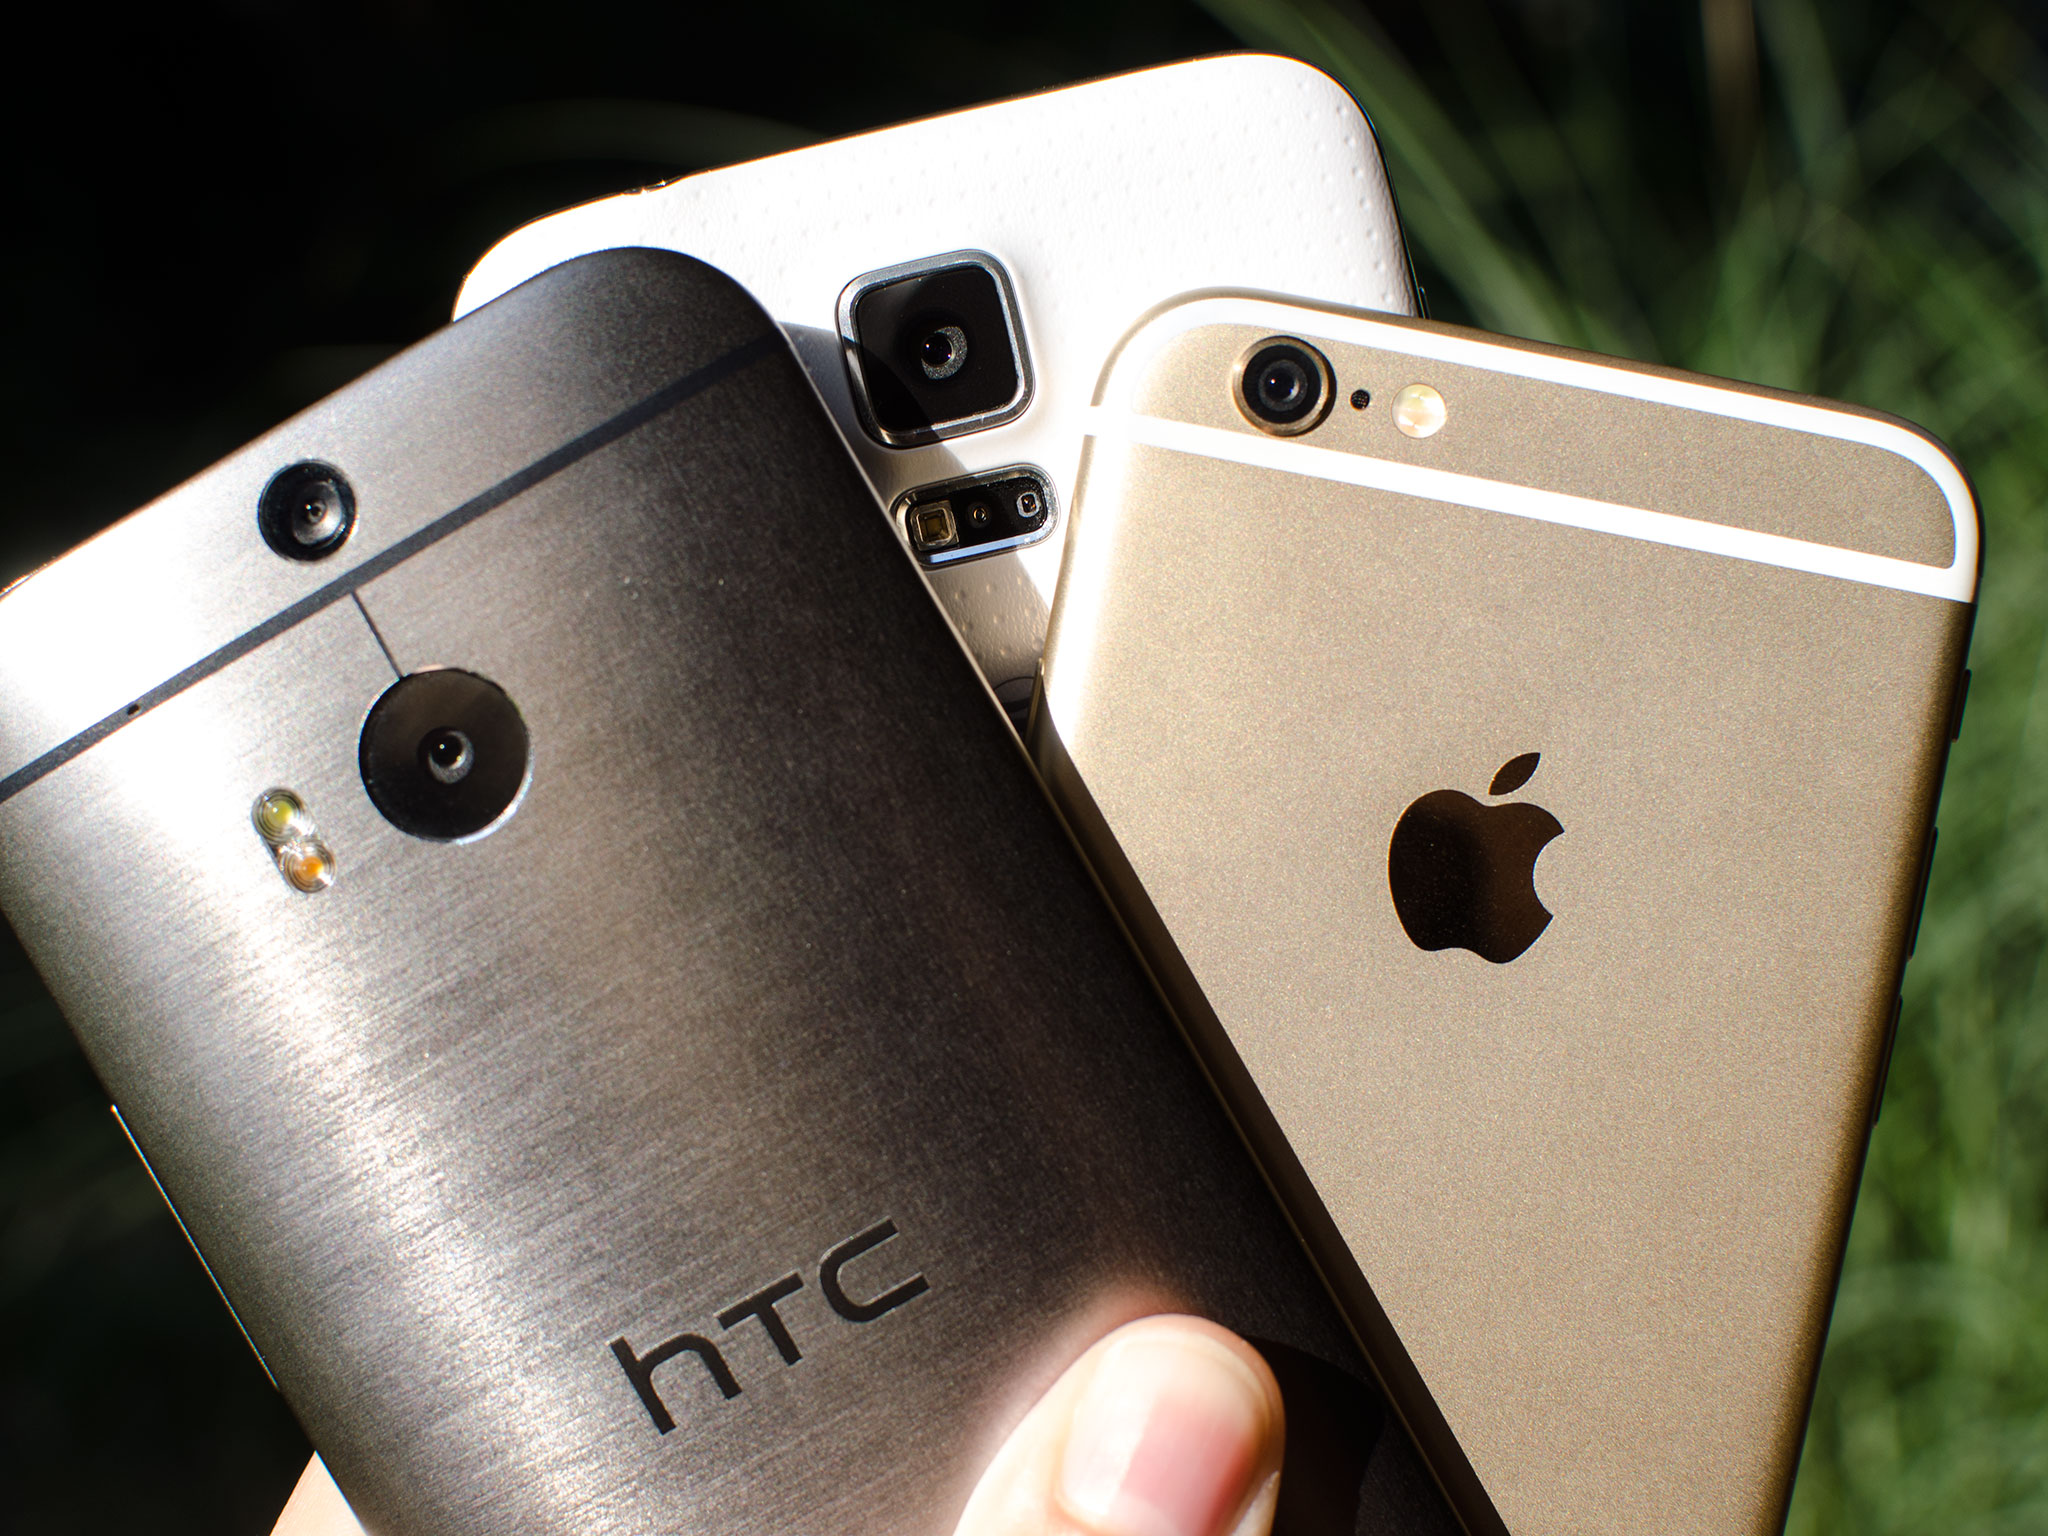 iPhone 6 vs Galaxy S5 vs HTC One M8: Camera shootout!